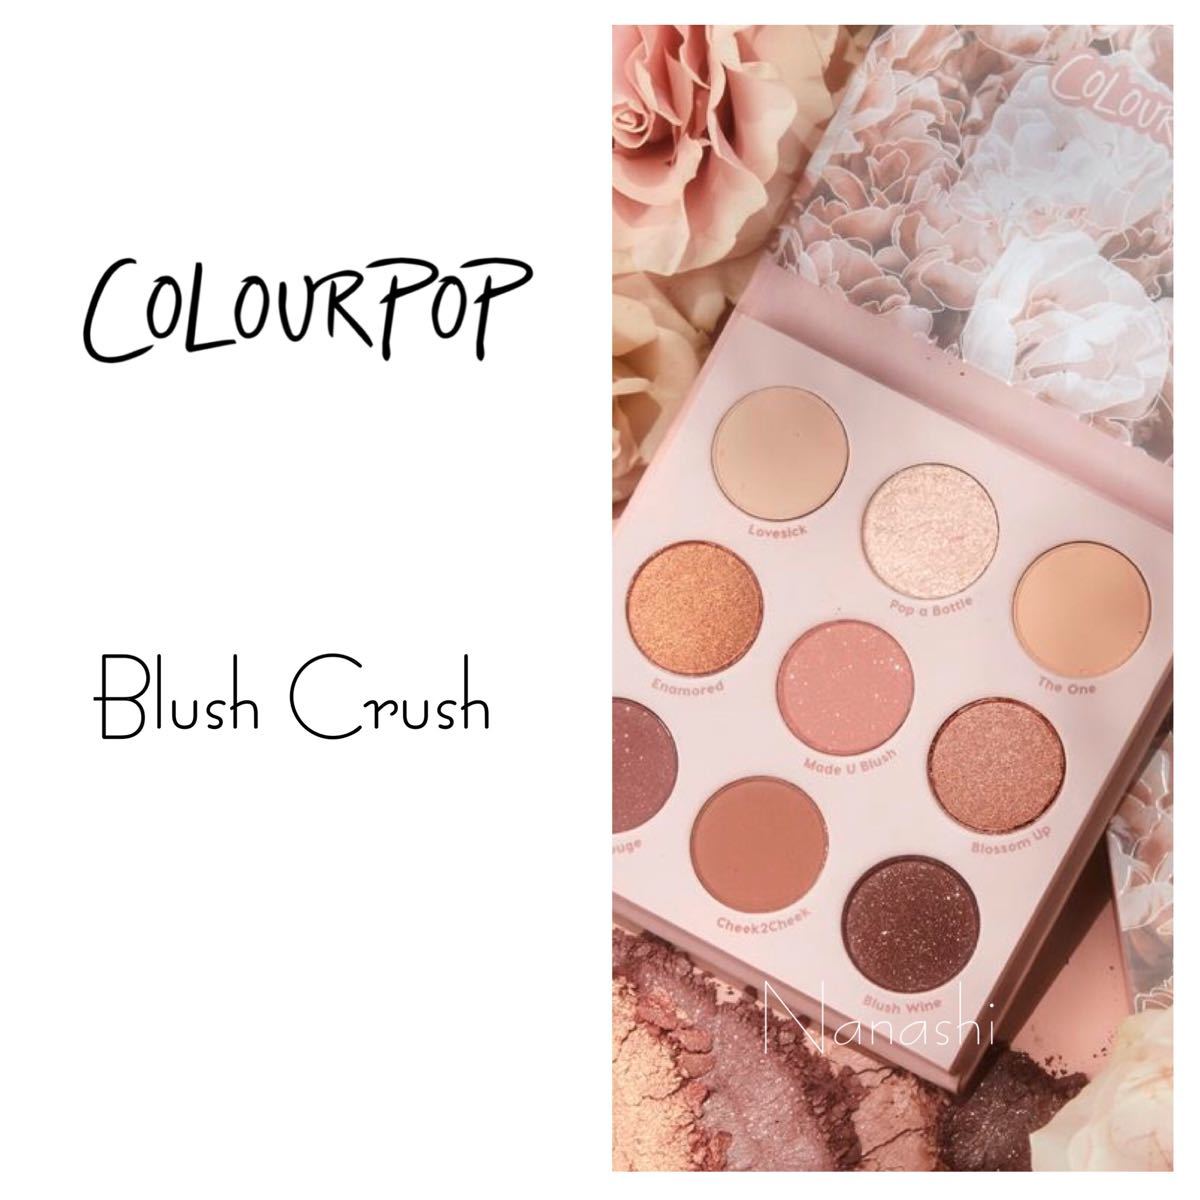 Colourpop eyeshadow palette blush crush アイシャドウパレット